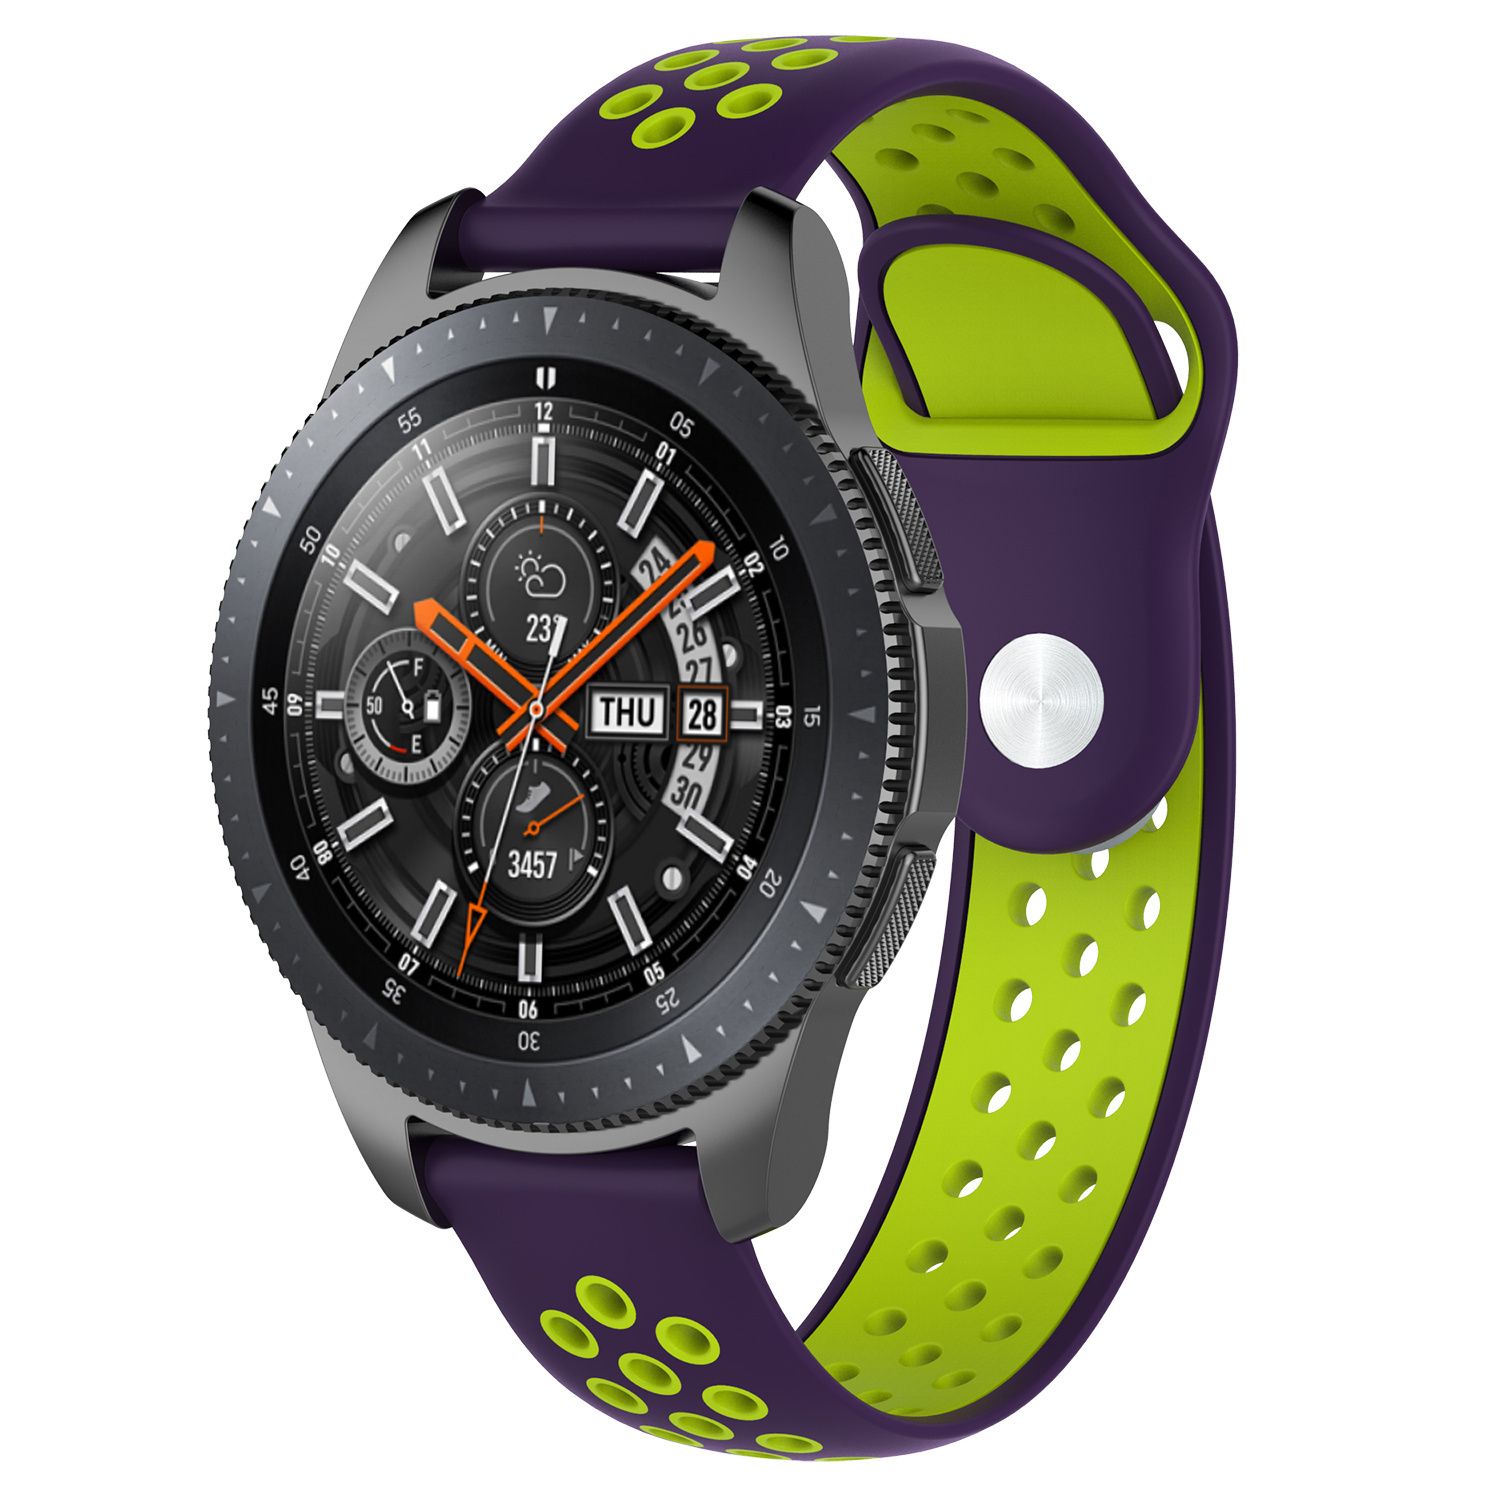 Samsung Galaxy Watch dupla sport szalag - lila zöld